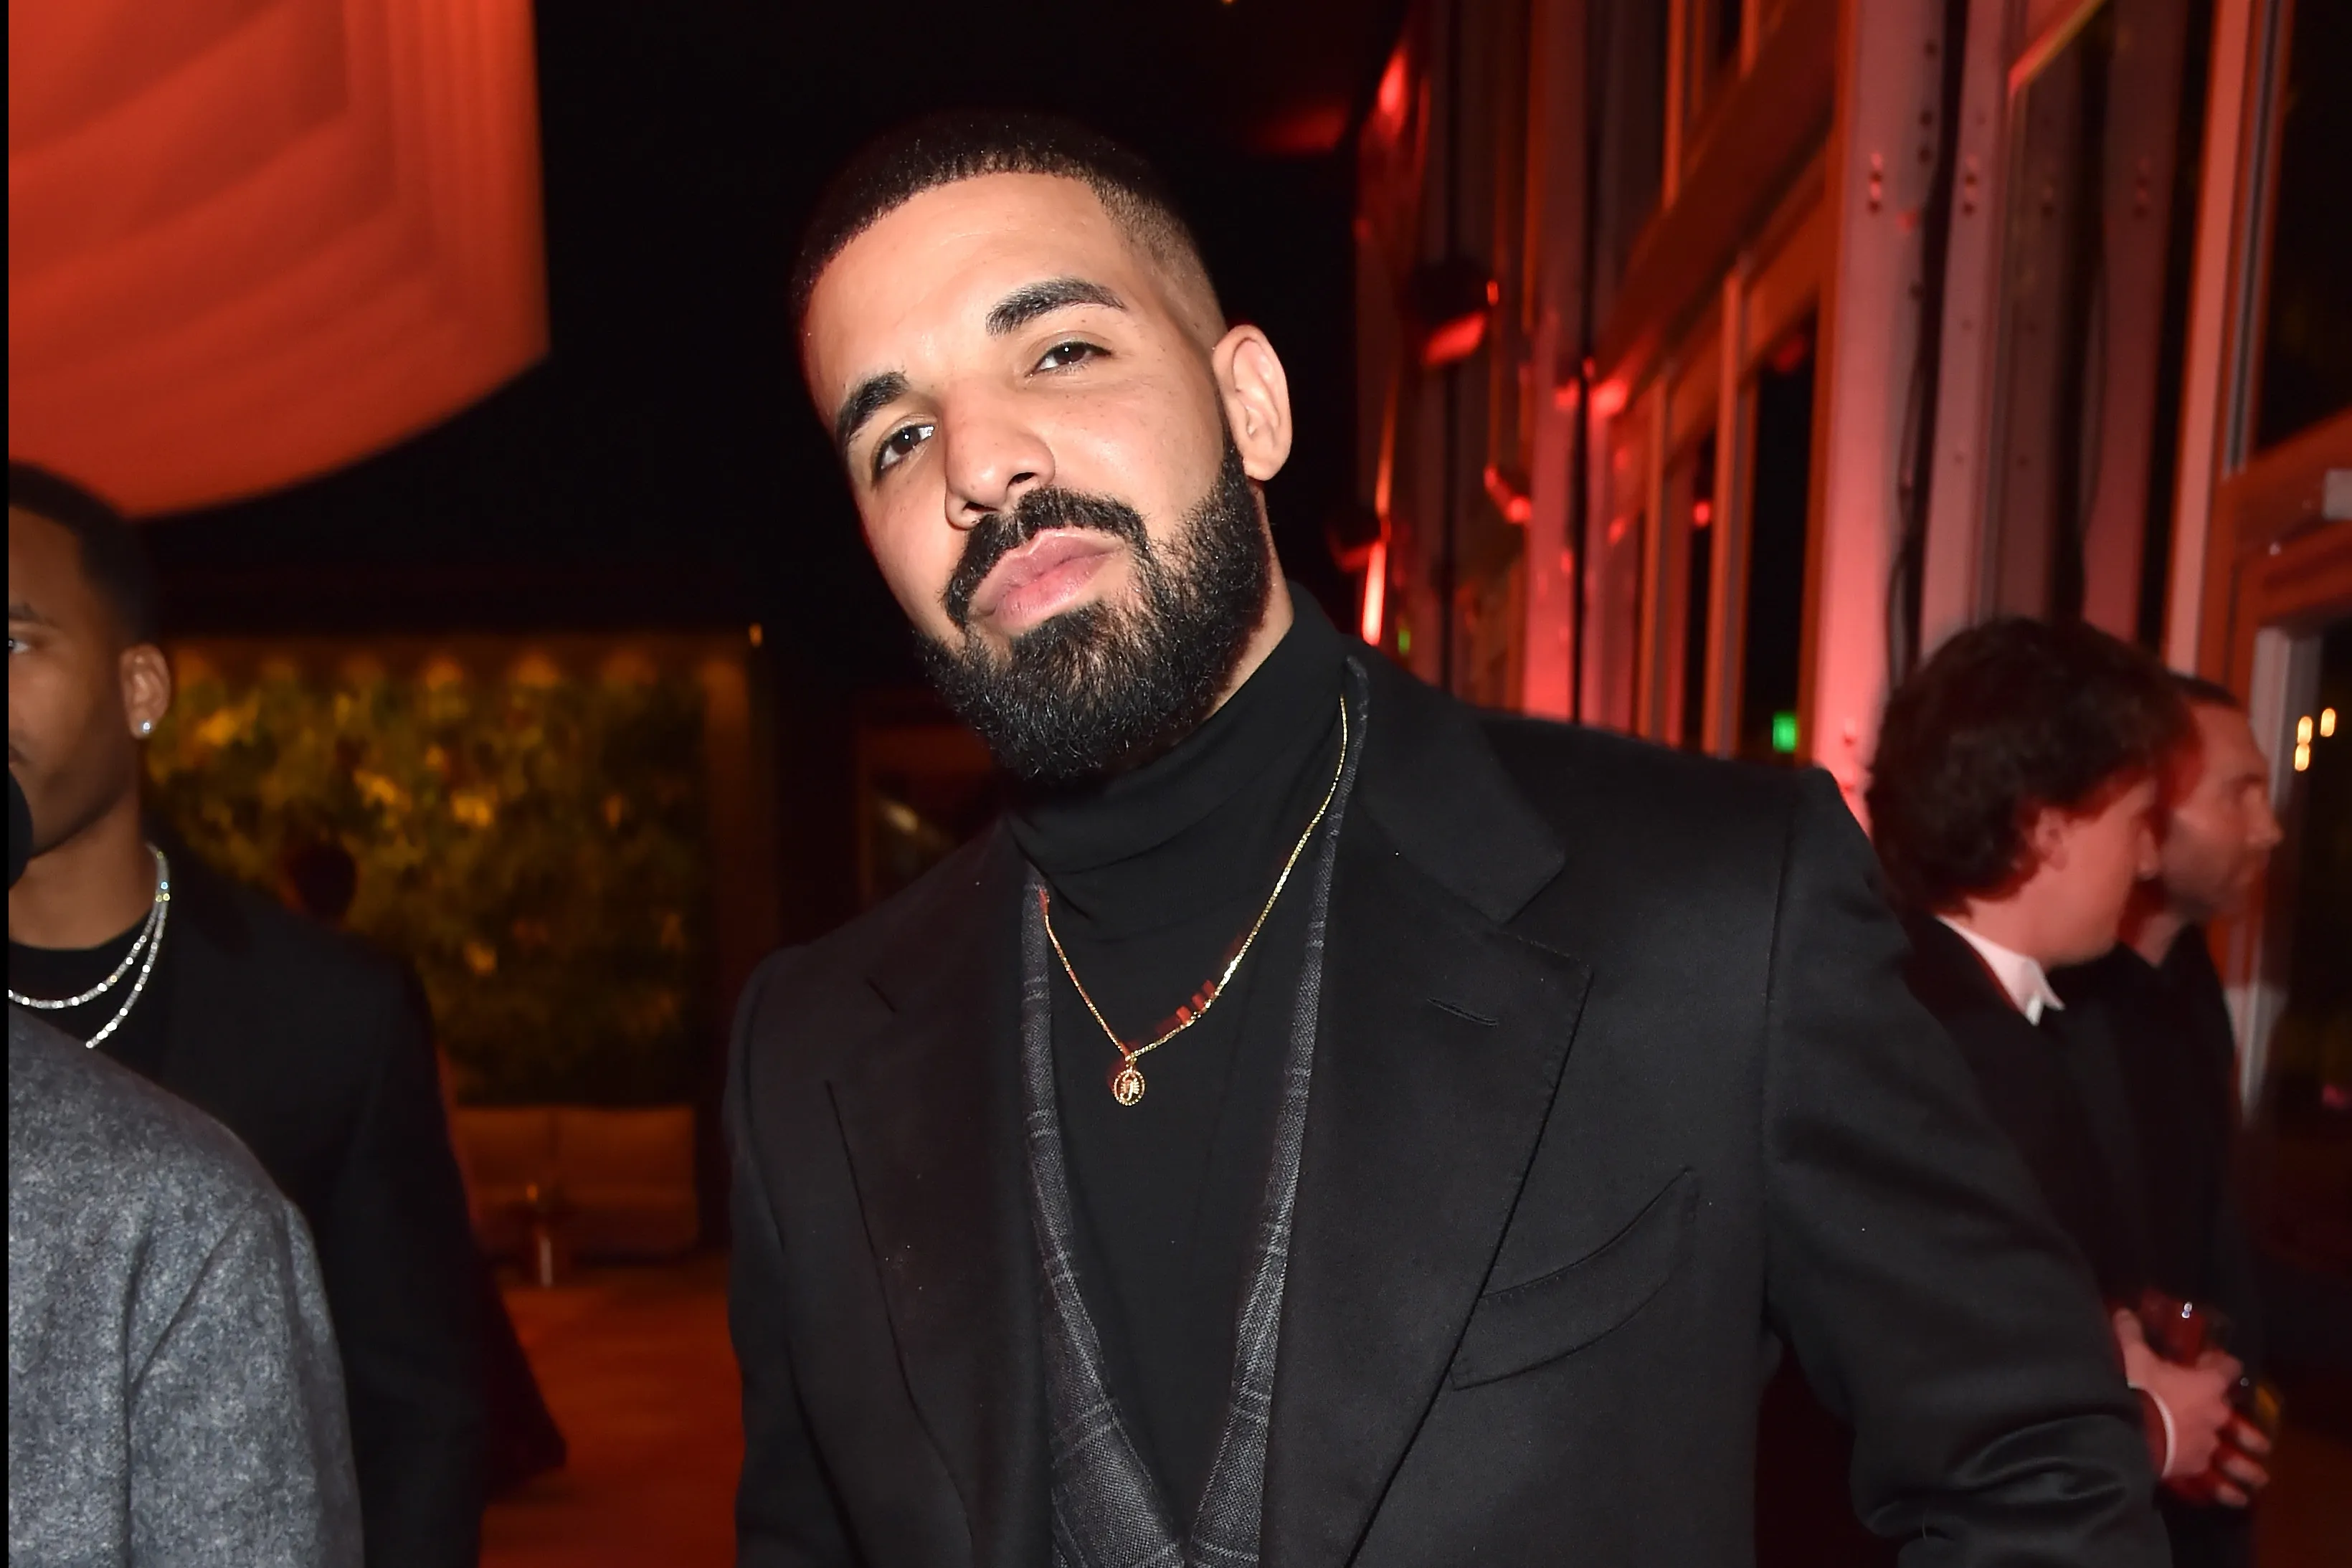 Drake What Is Drake's Net Worth? Money